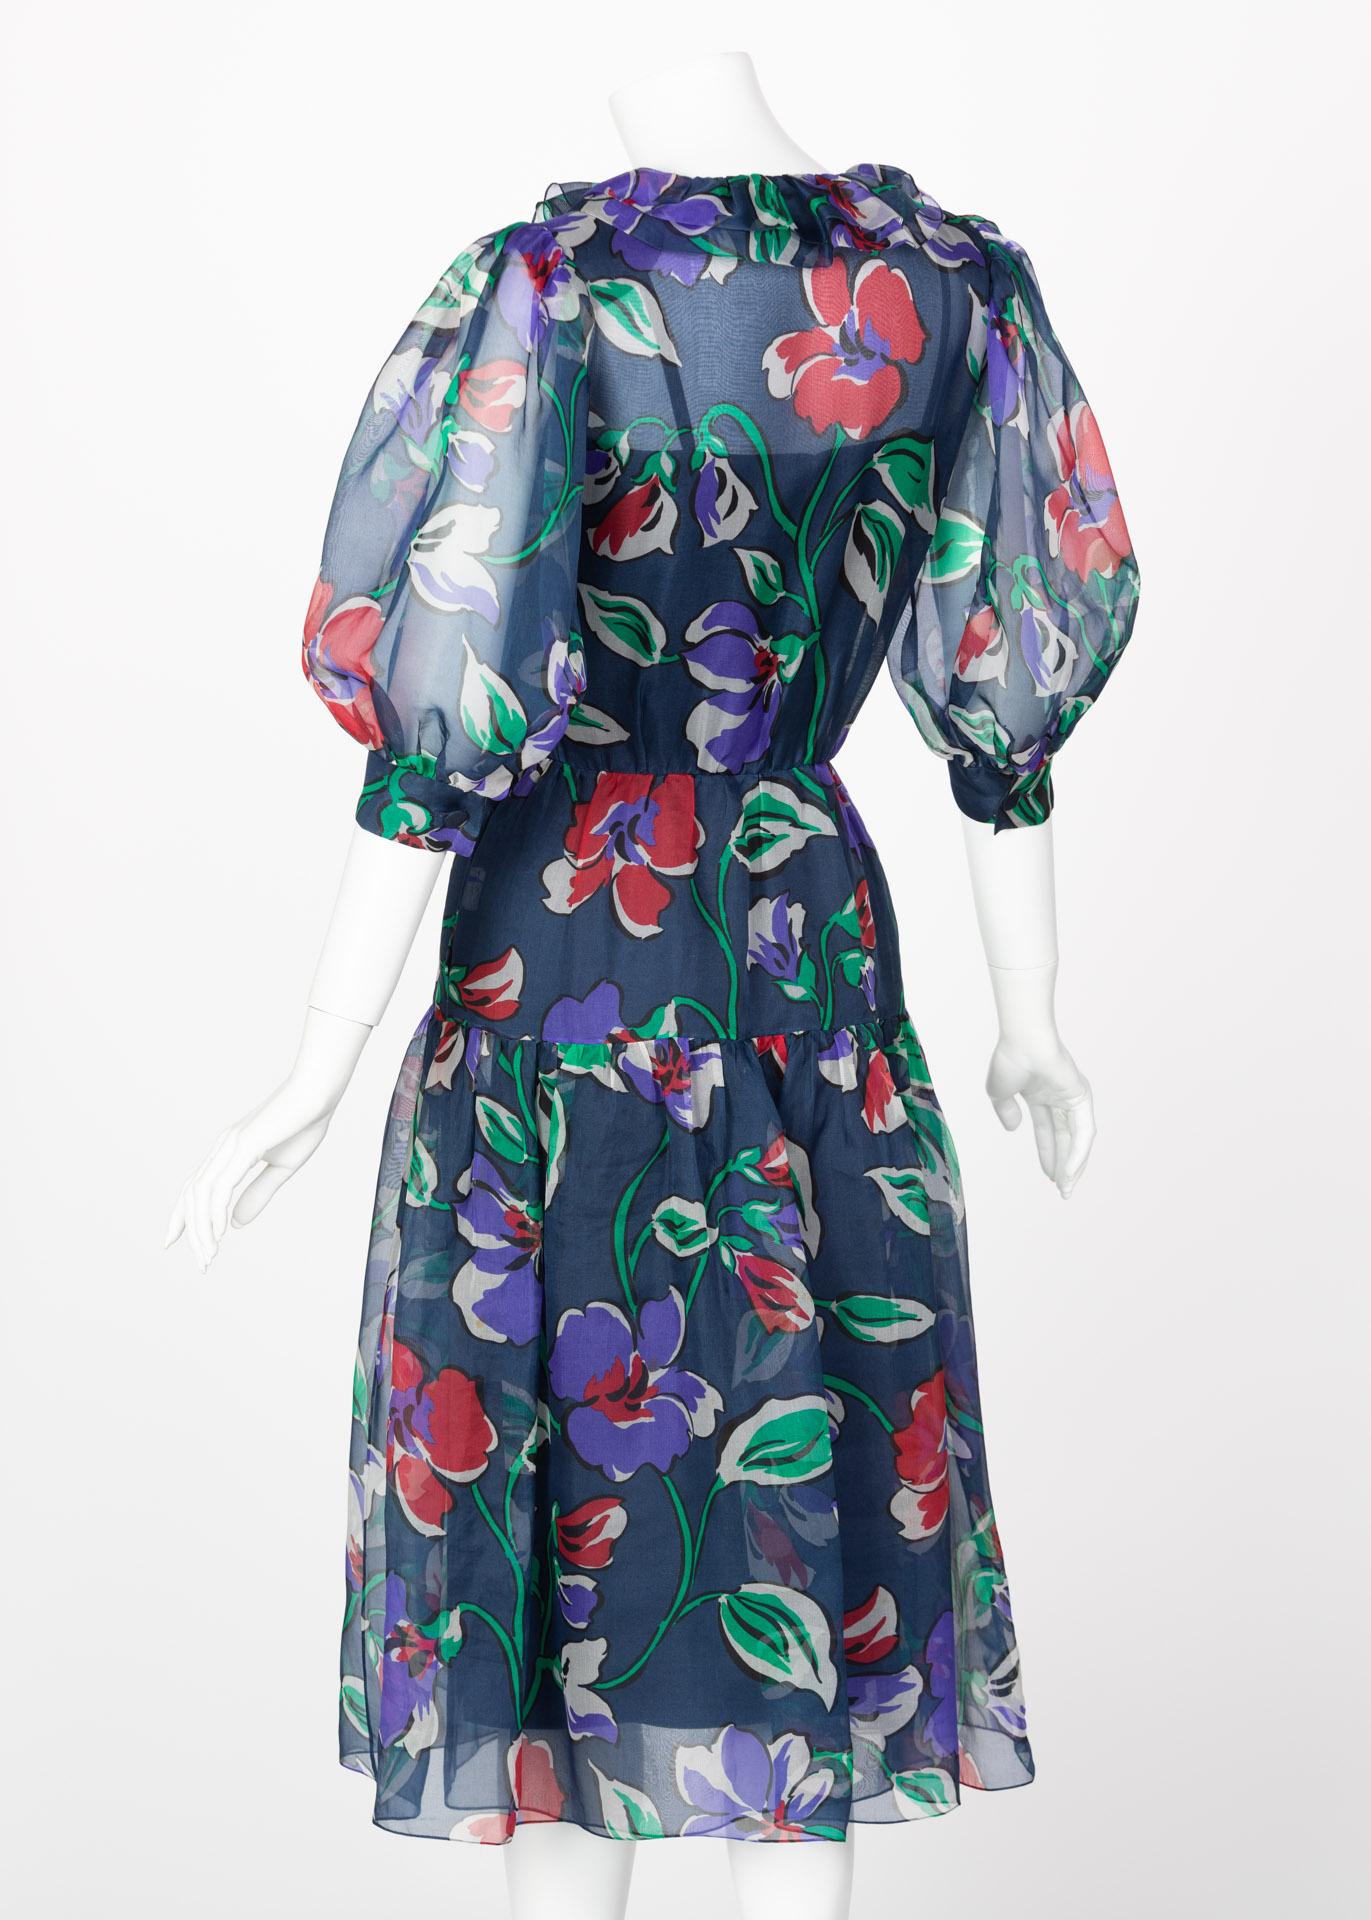 Women's Givenchy Blue Silk Organza Floral Print Dress, 1970s